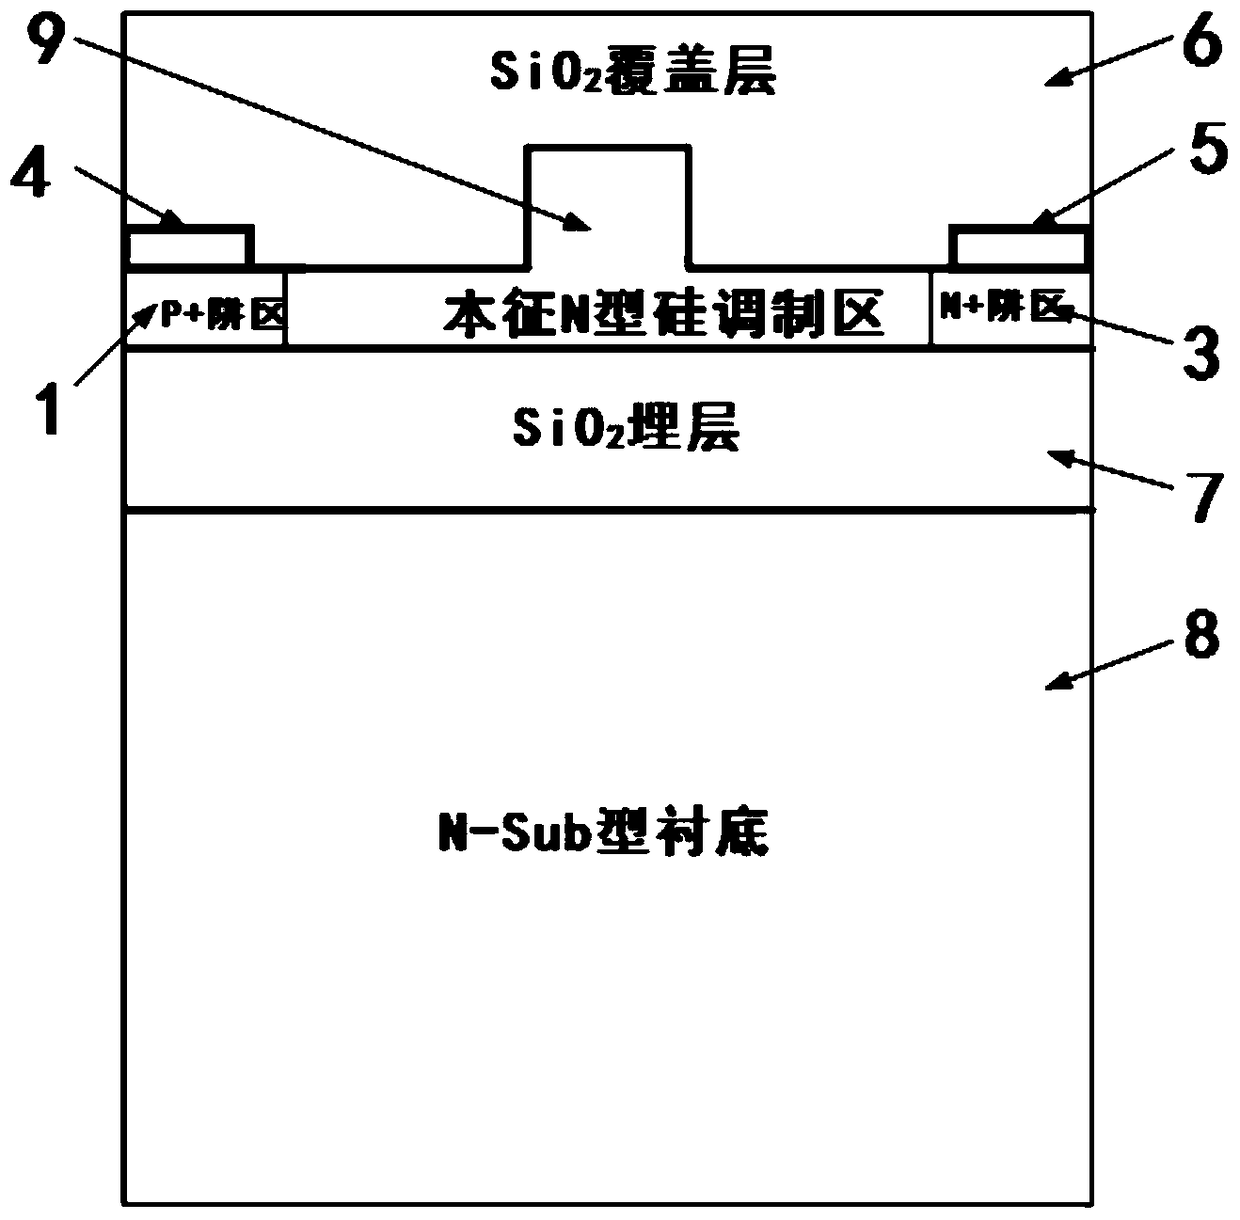 A Double Heterojunction Pin Electro-optic Modulator Structure